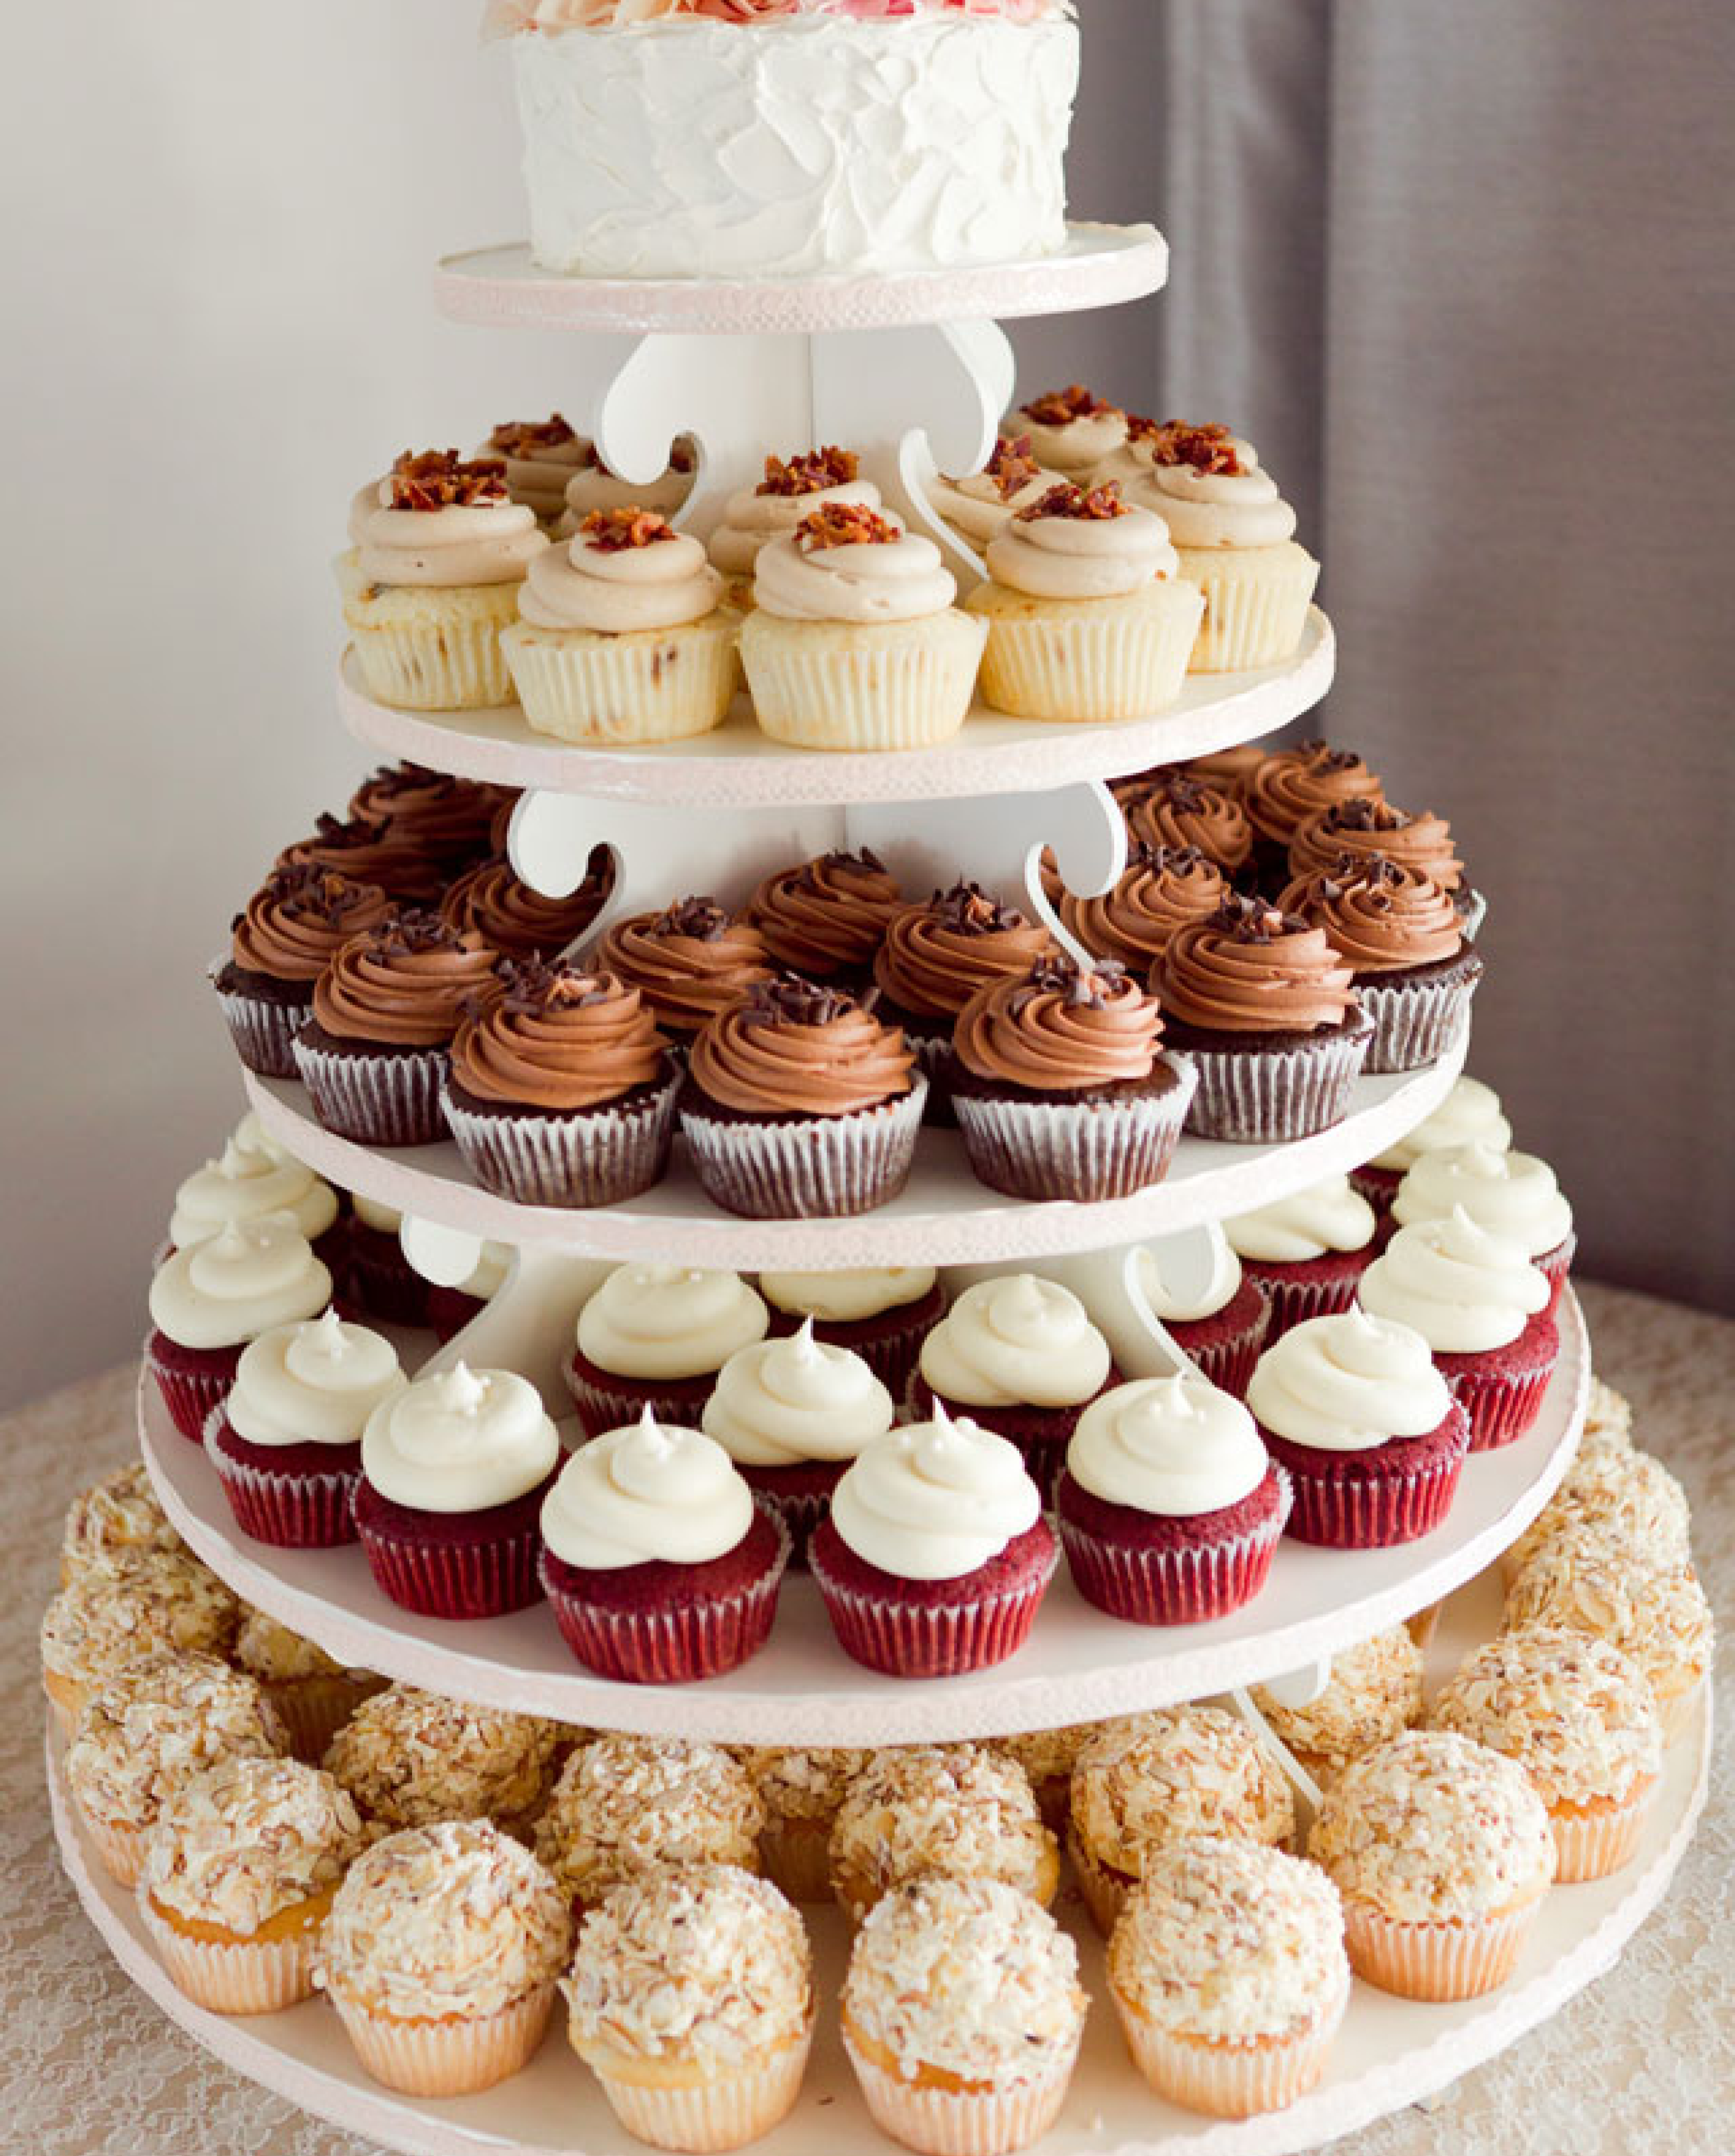 We like cakes. Торт с капкейками. Свадебный торт с капкейками. Свадебные пирожные. В Е Й П.